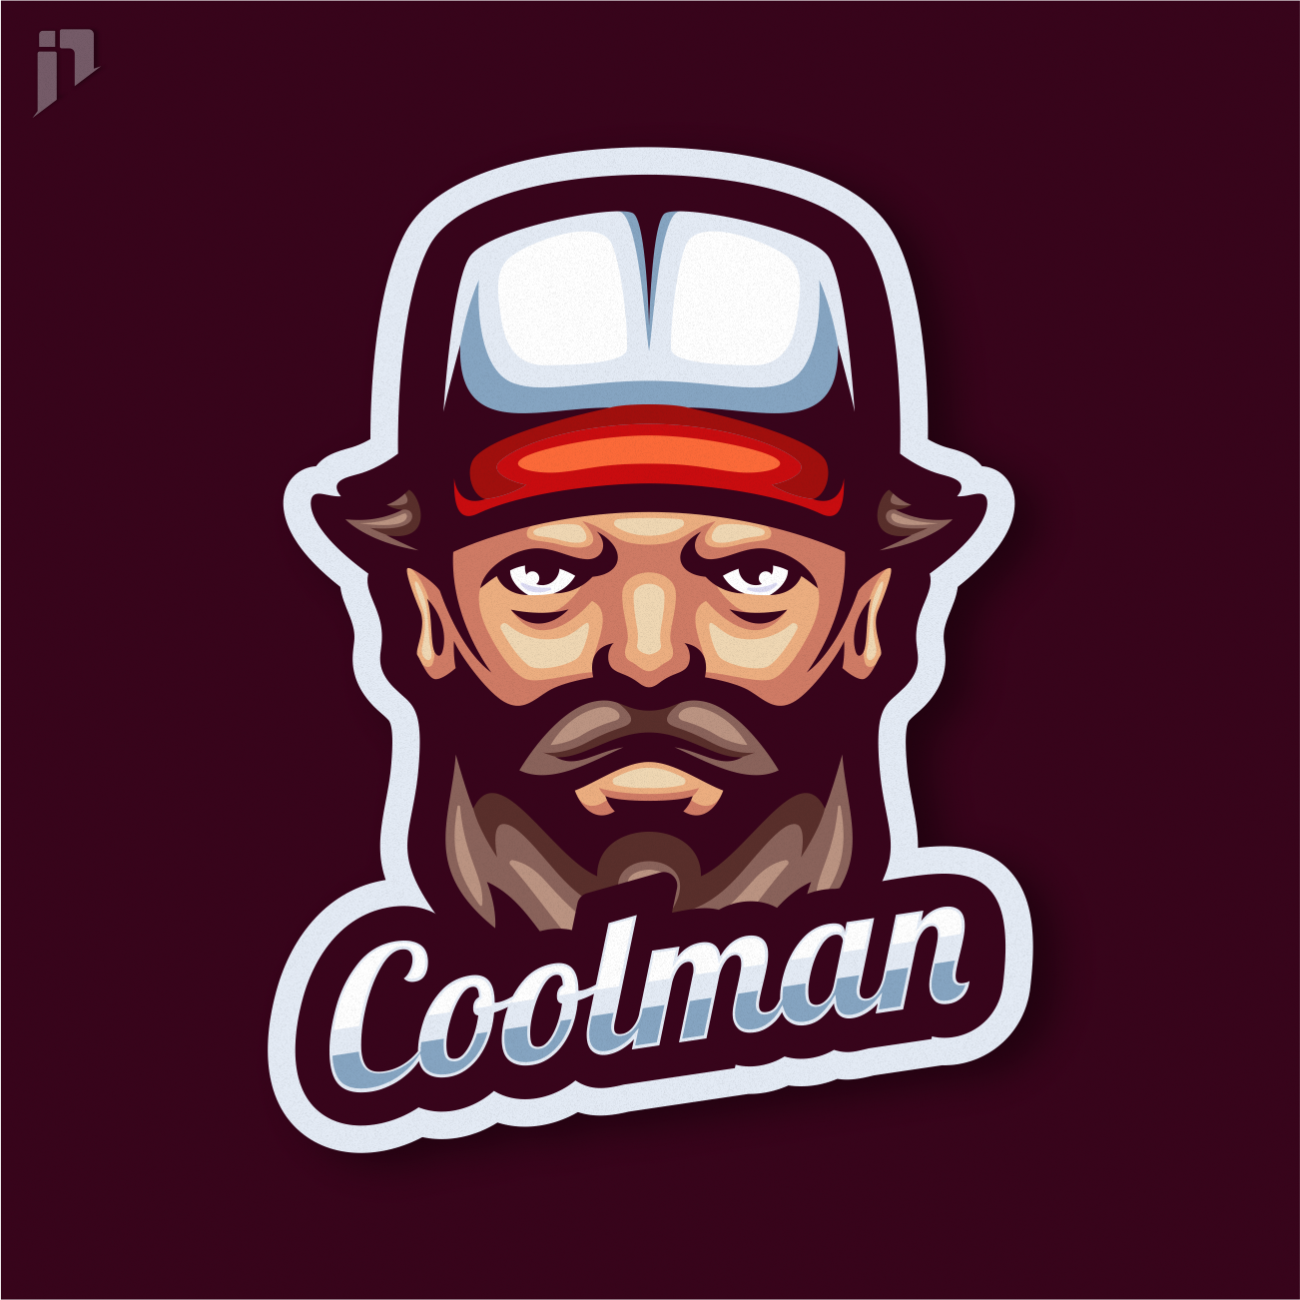 Cool Man Mascot Logo Design by bakats111 on Dribbble